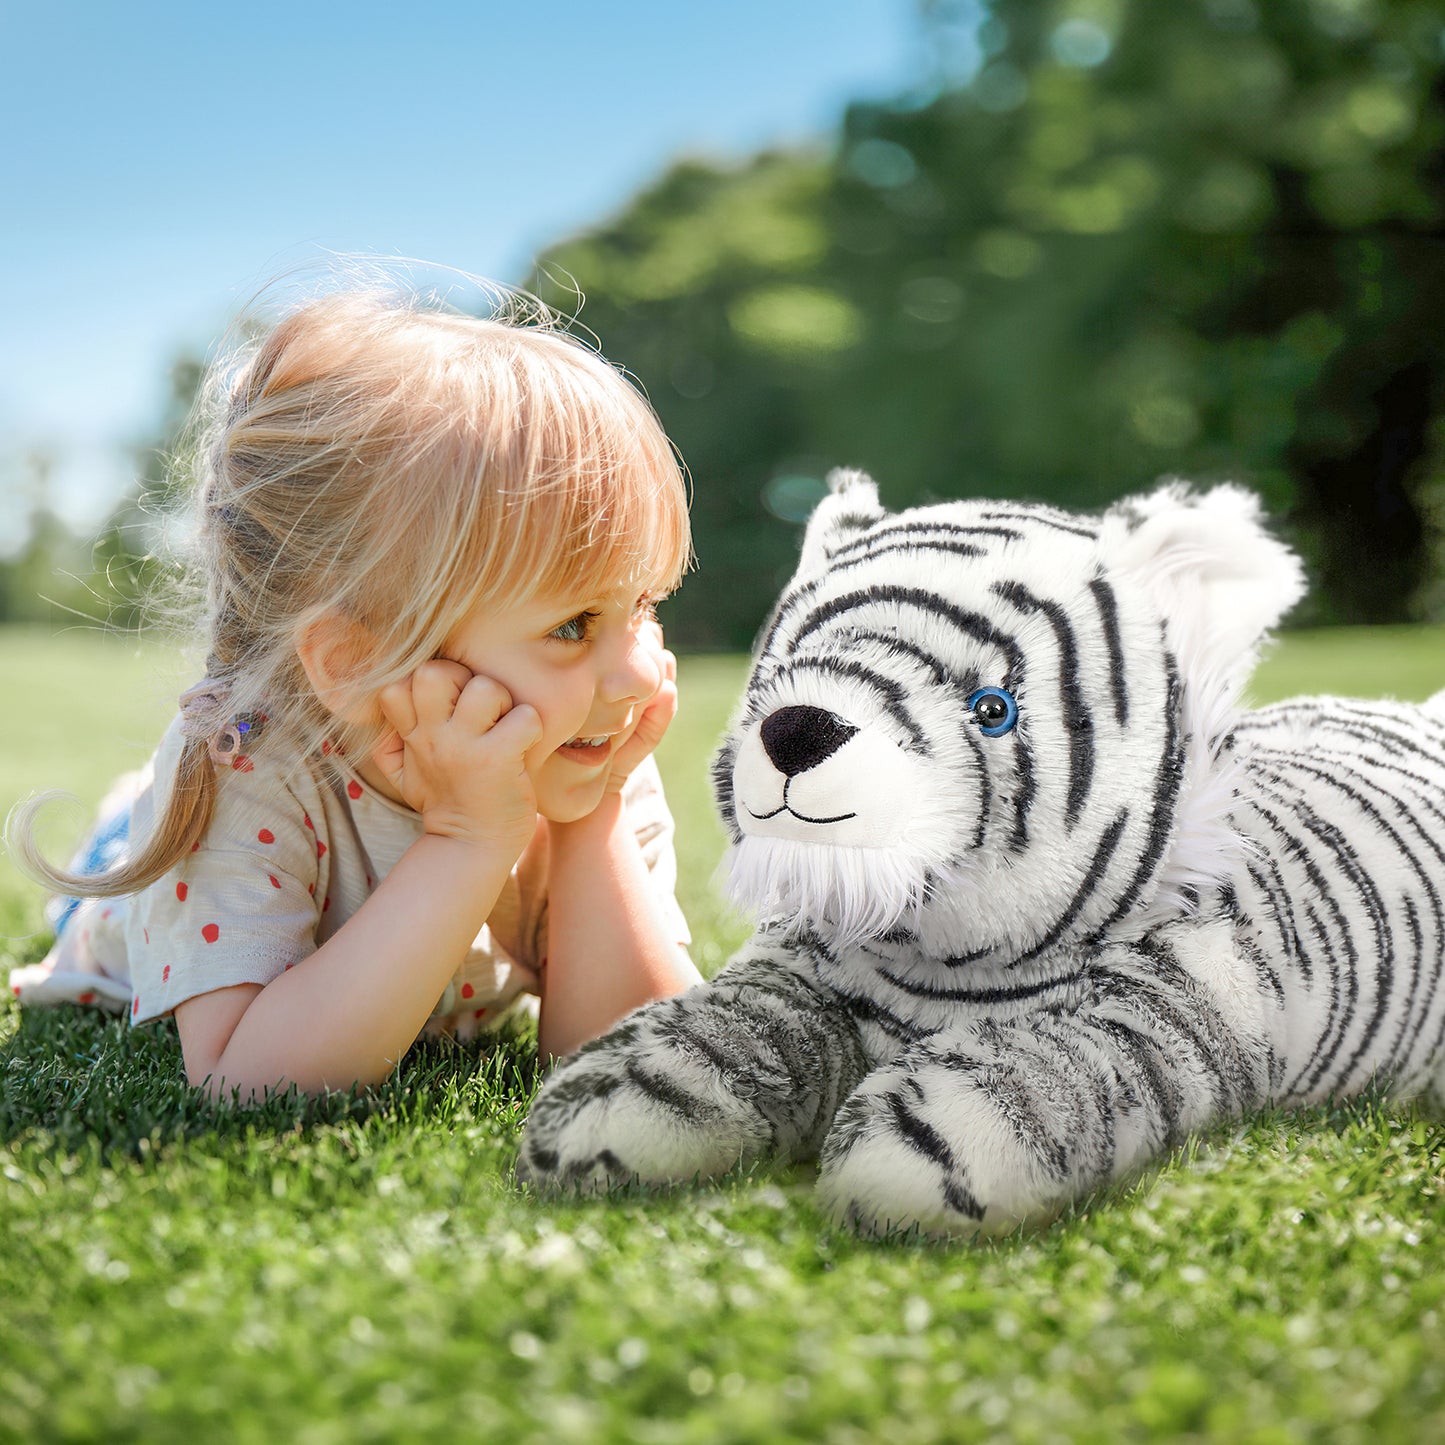 White Tiger Stuffed Animal, 22 Inches - MorisMos Jungle Plush Toys